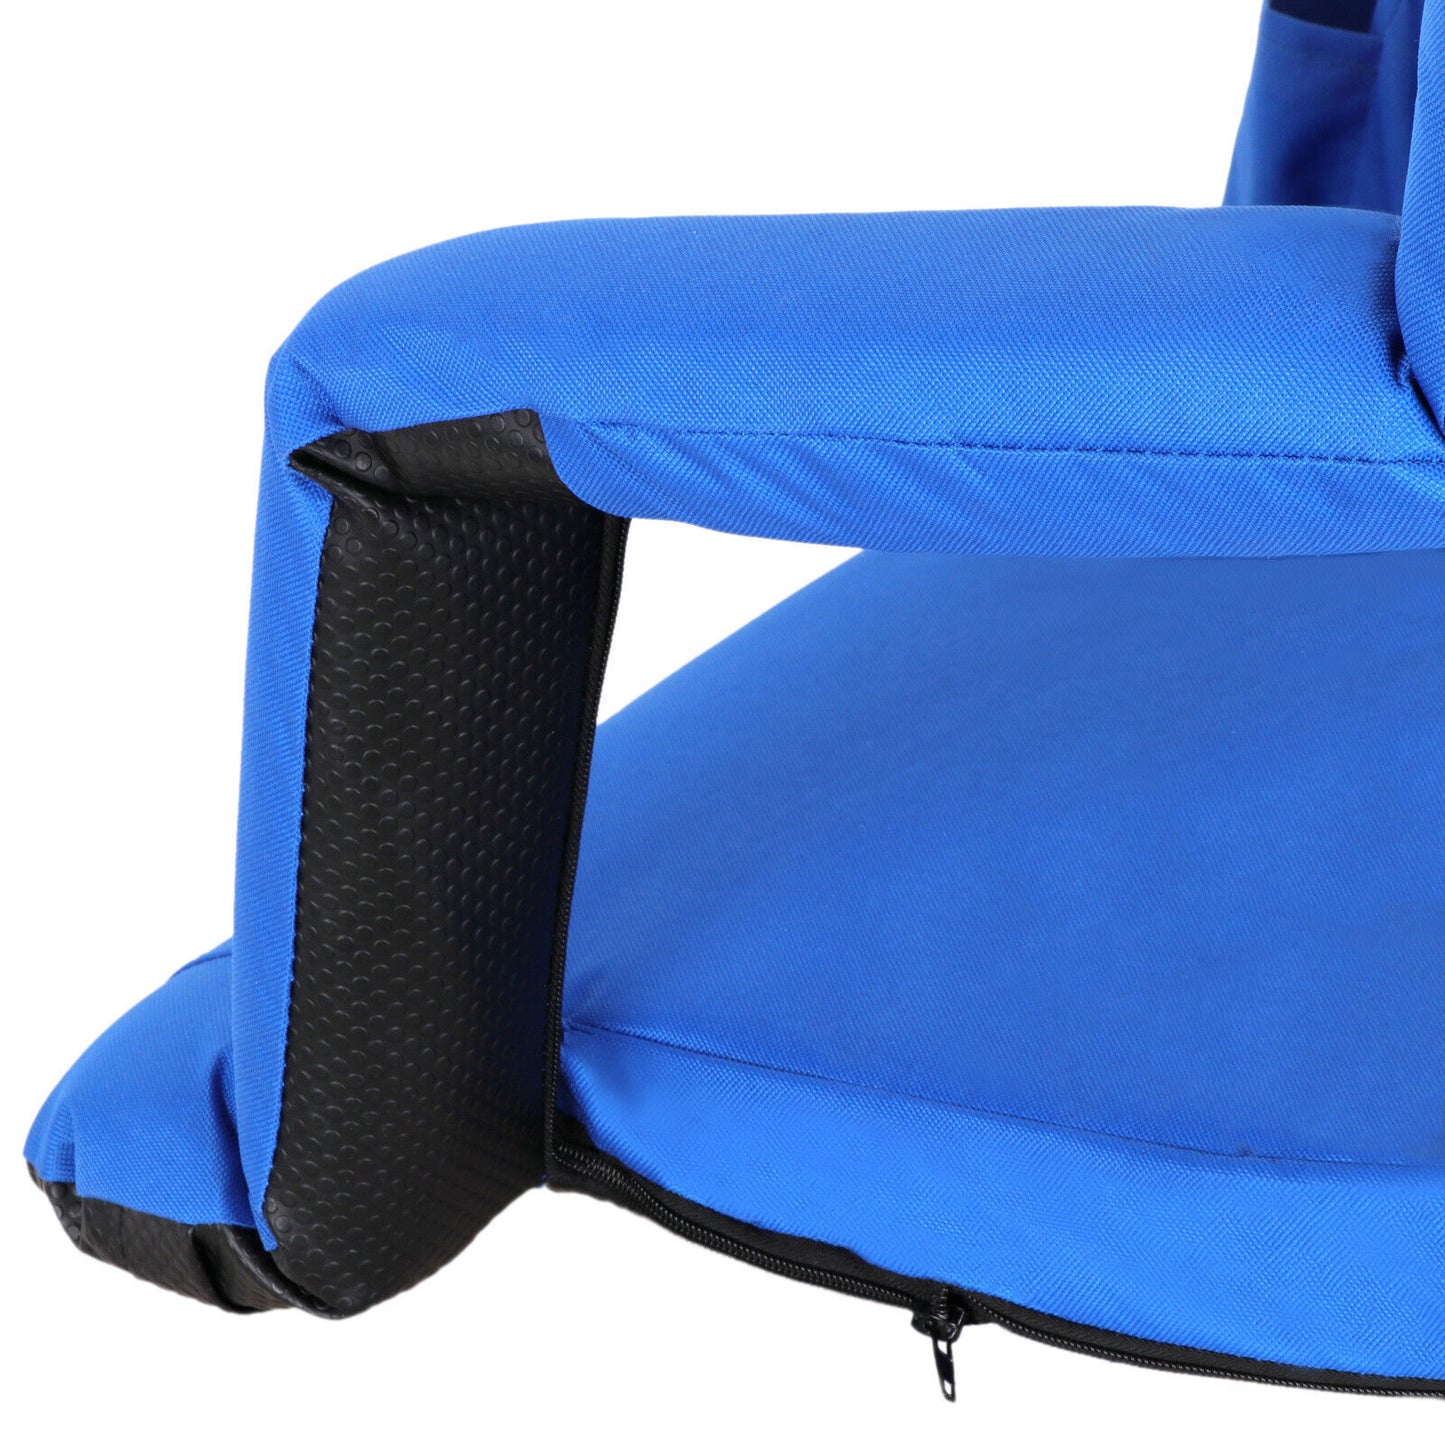 2PCS Stadium Seat Chairs 5 Reclining Positions Bleacher w/ Padded Cushion Backs